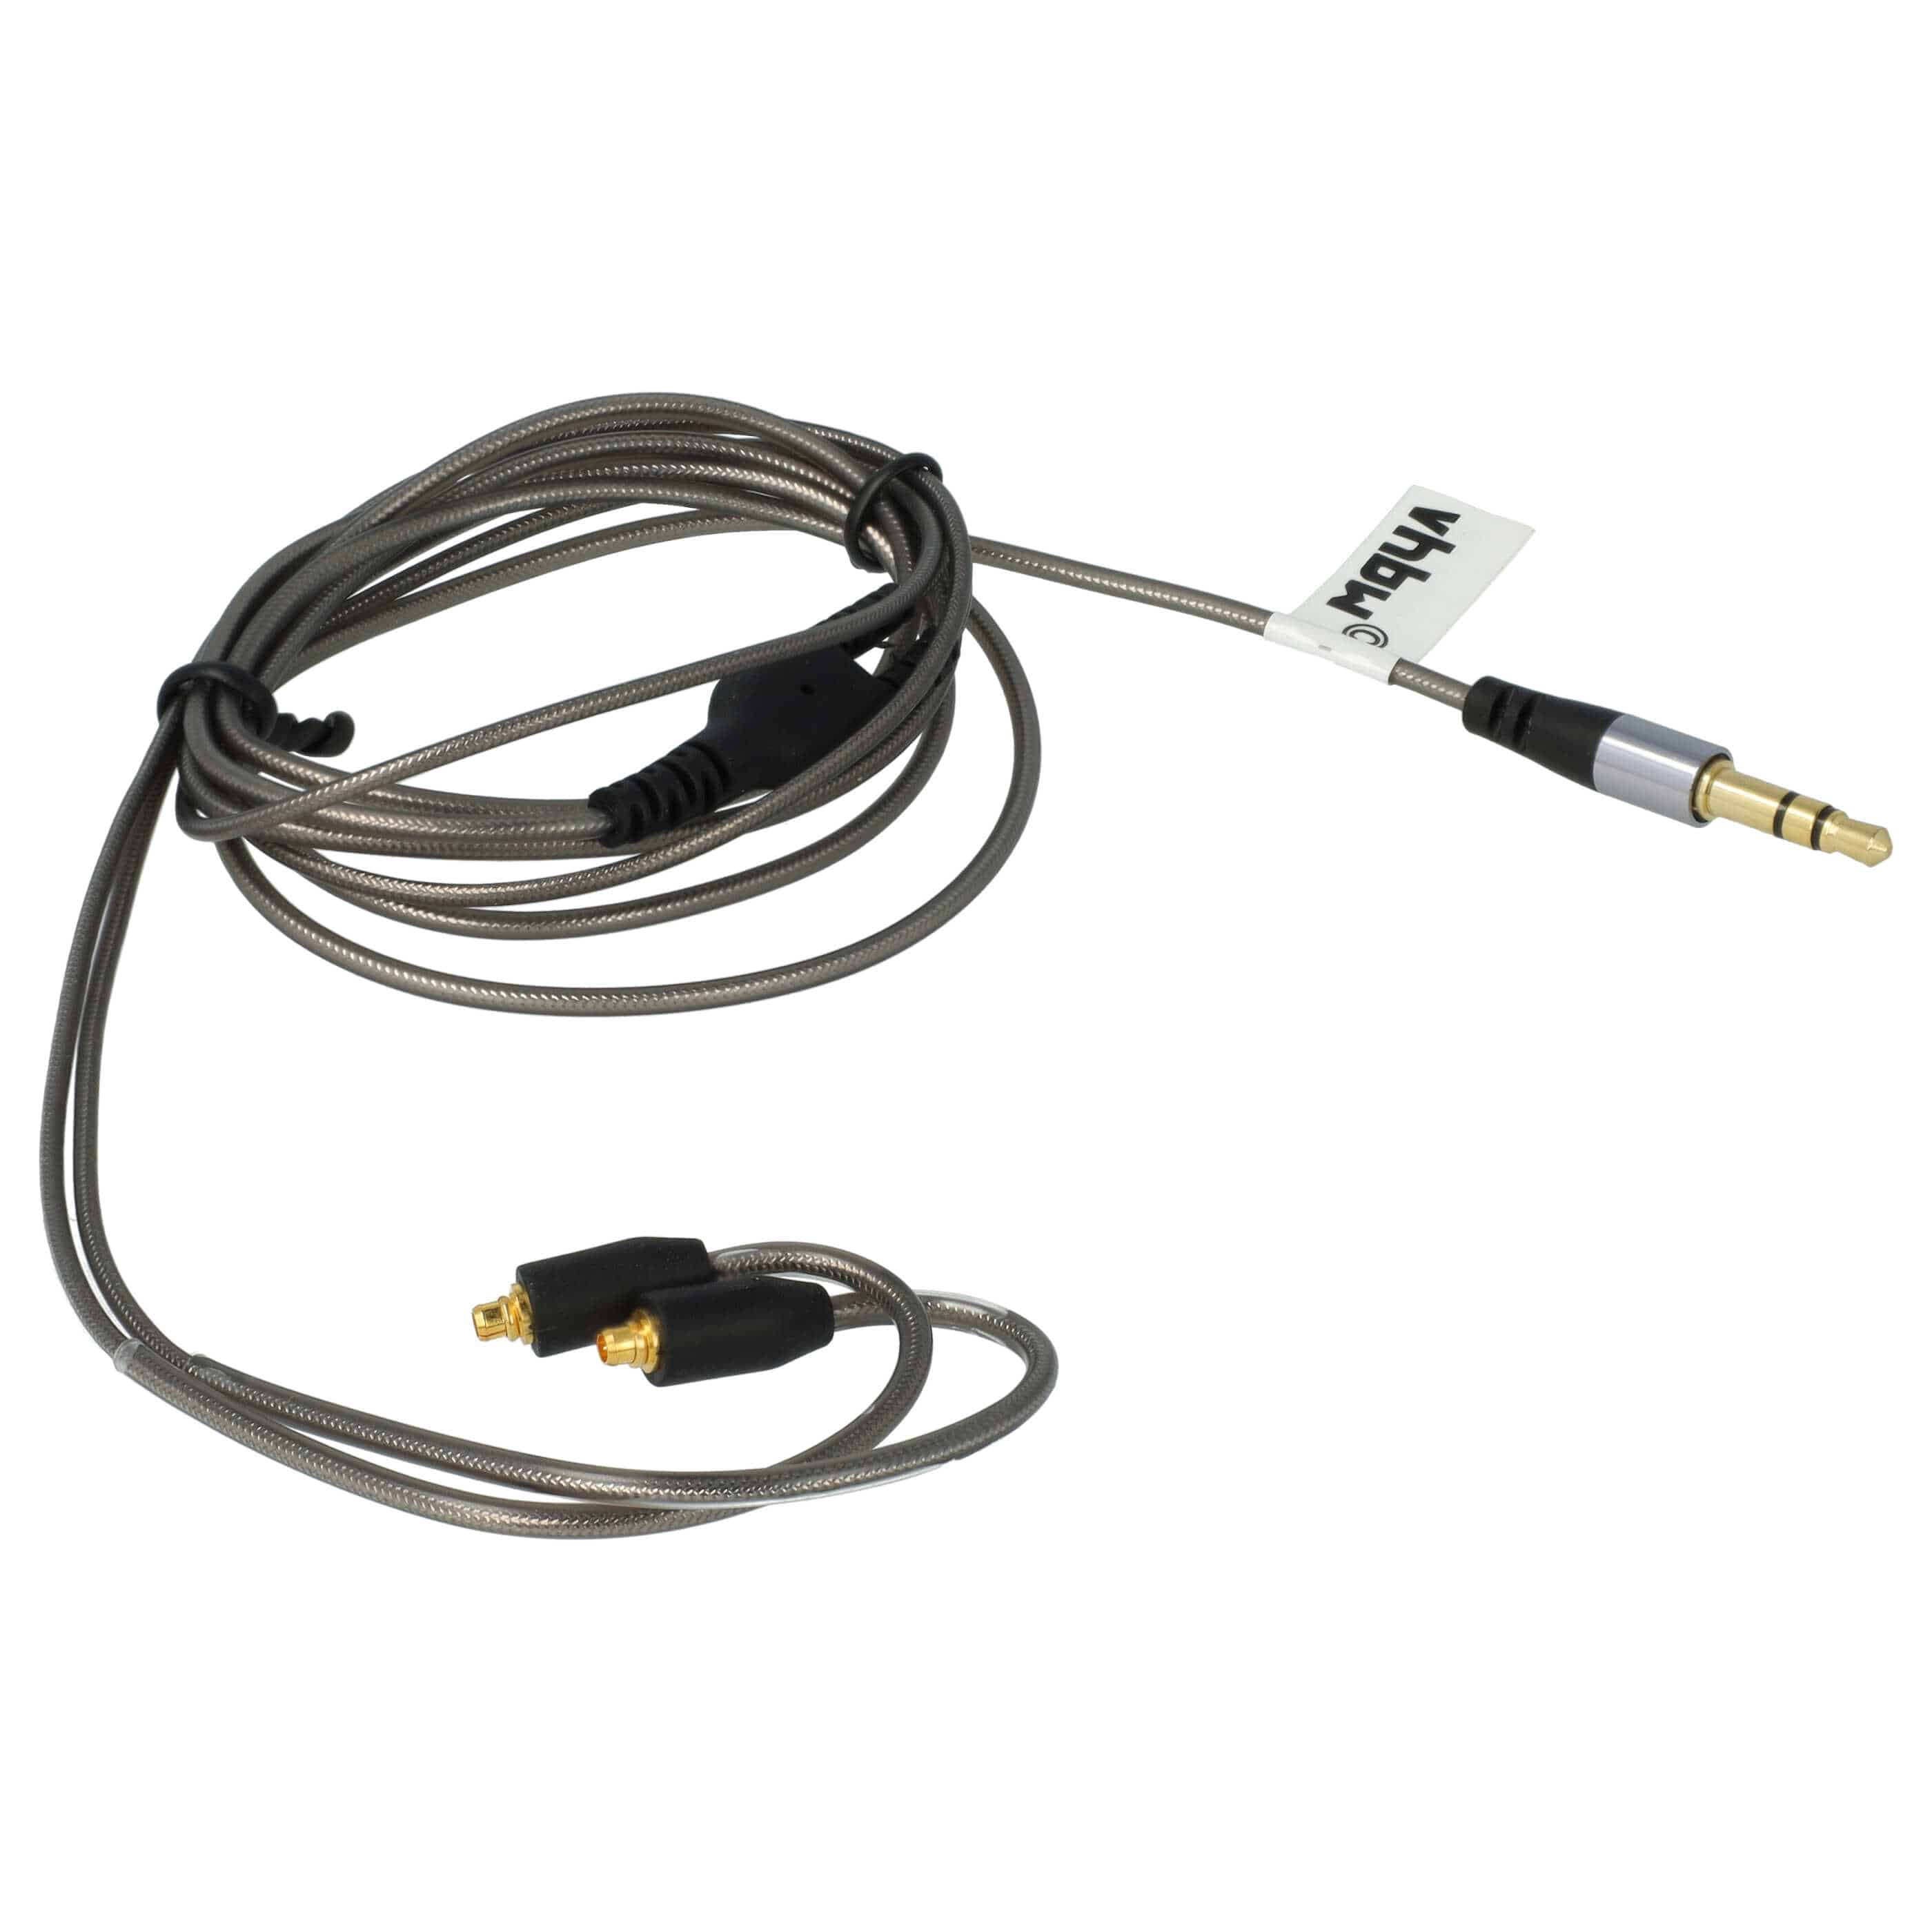 Kabel do słuchawek SE215 Shure - szary, 120 cm